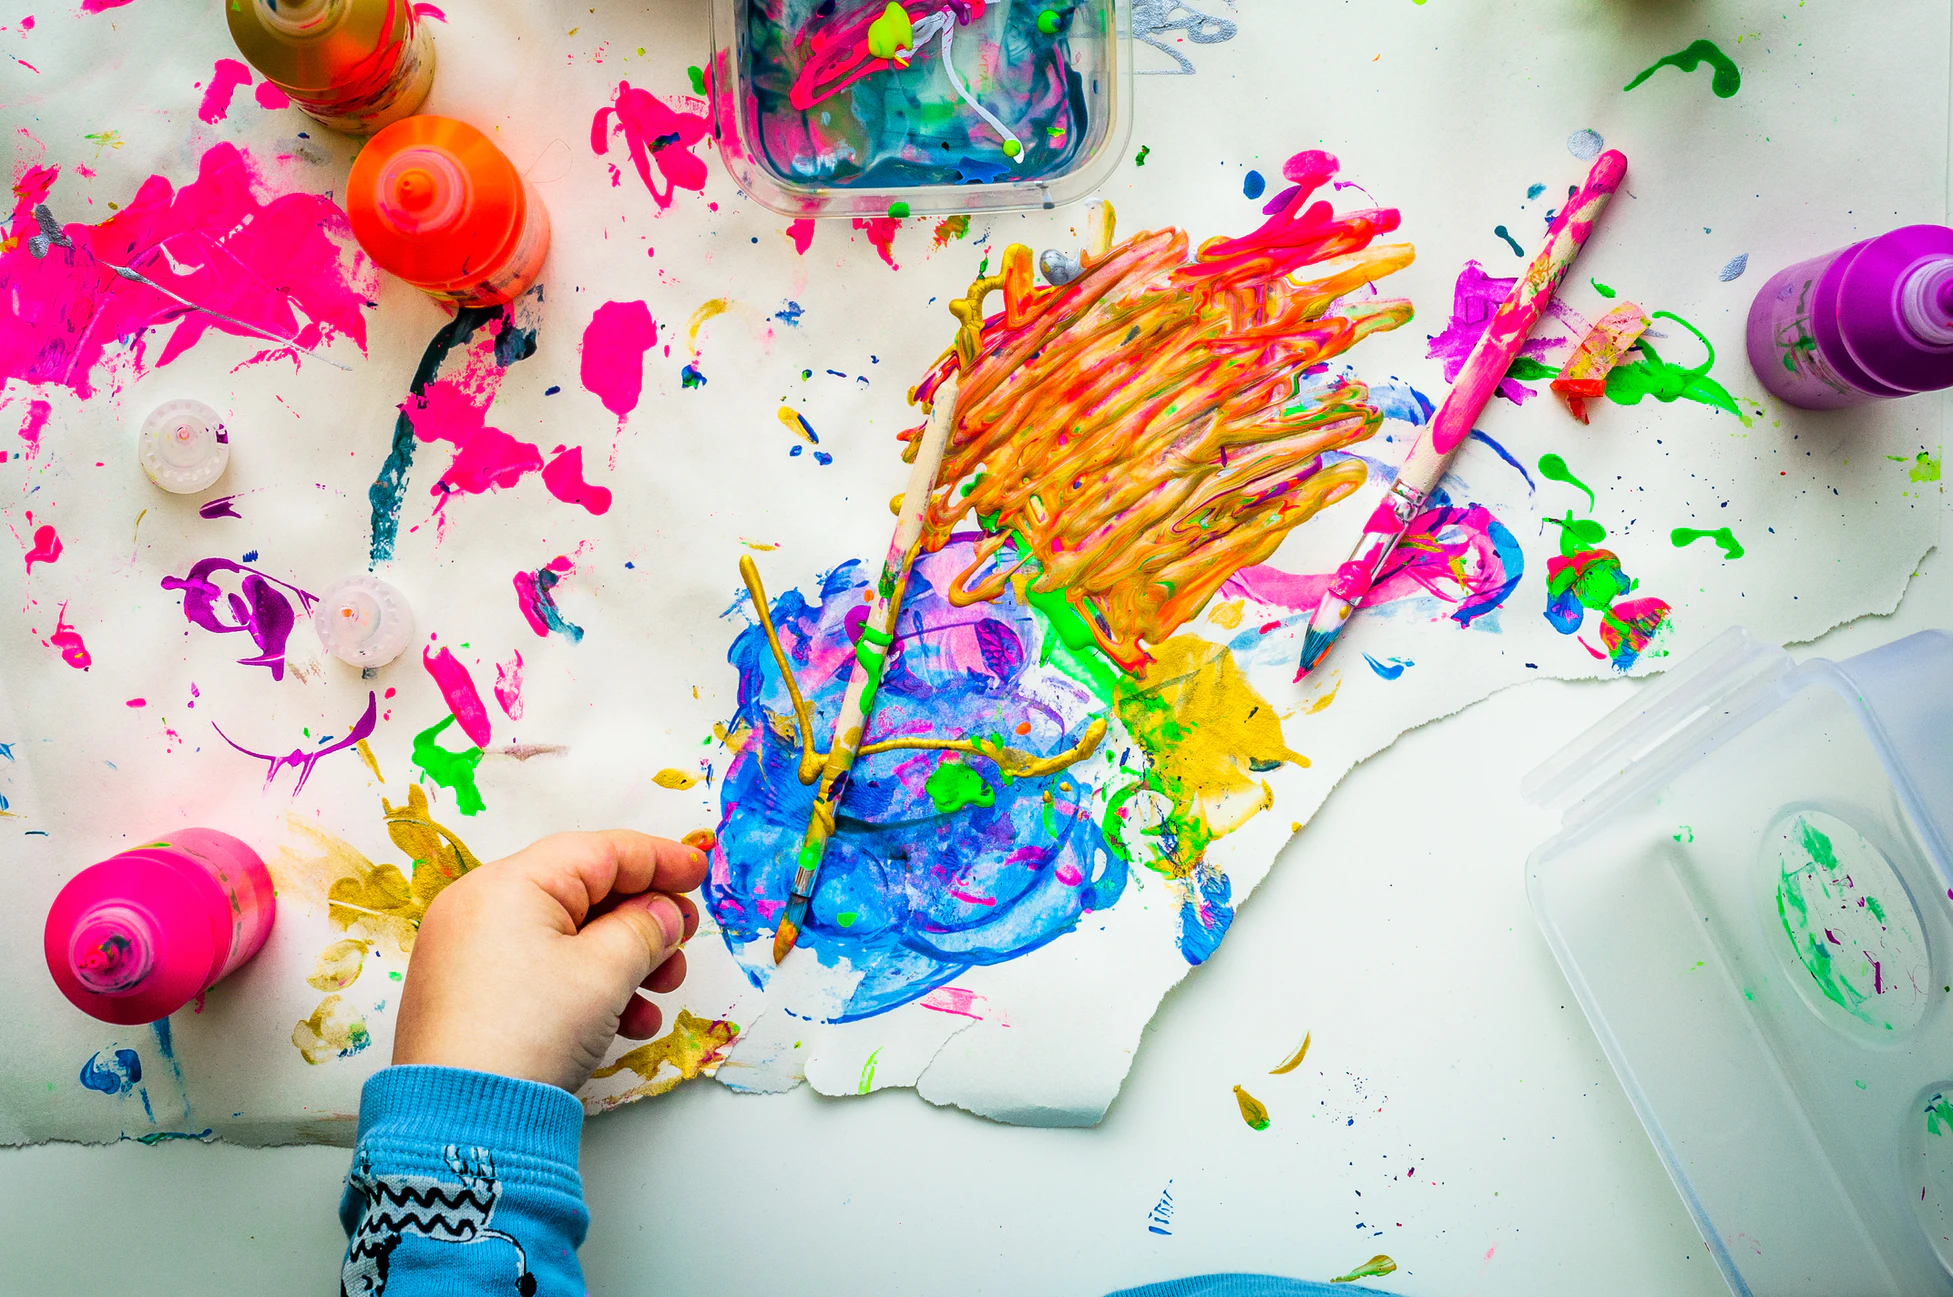 School Art and Craft Ideas for Preschoolers